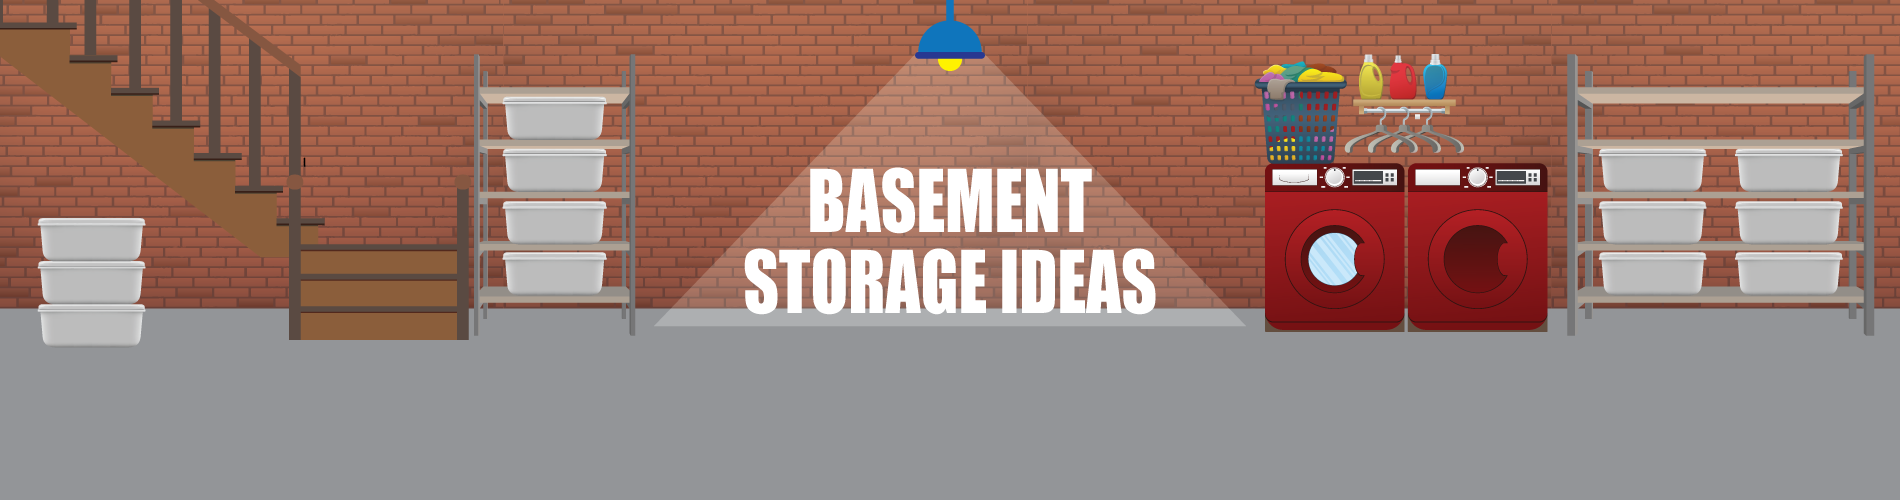 Basement Storage Ideas